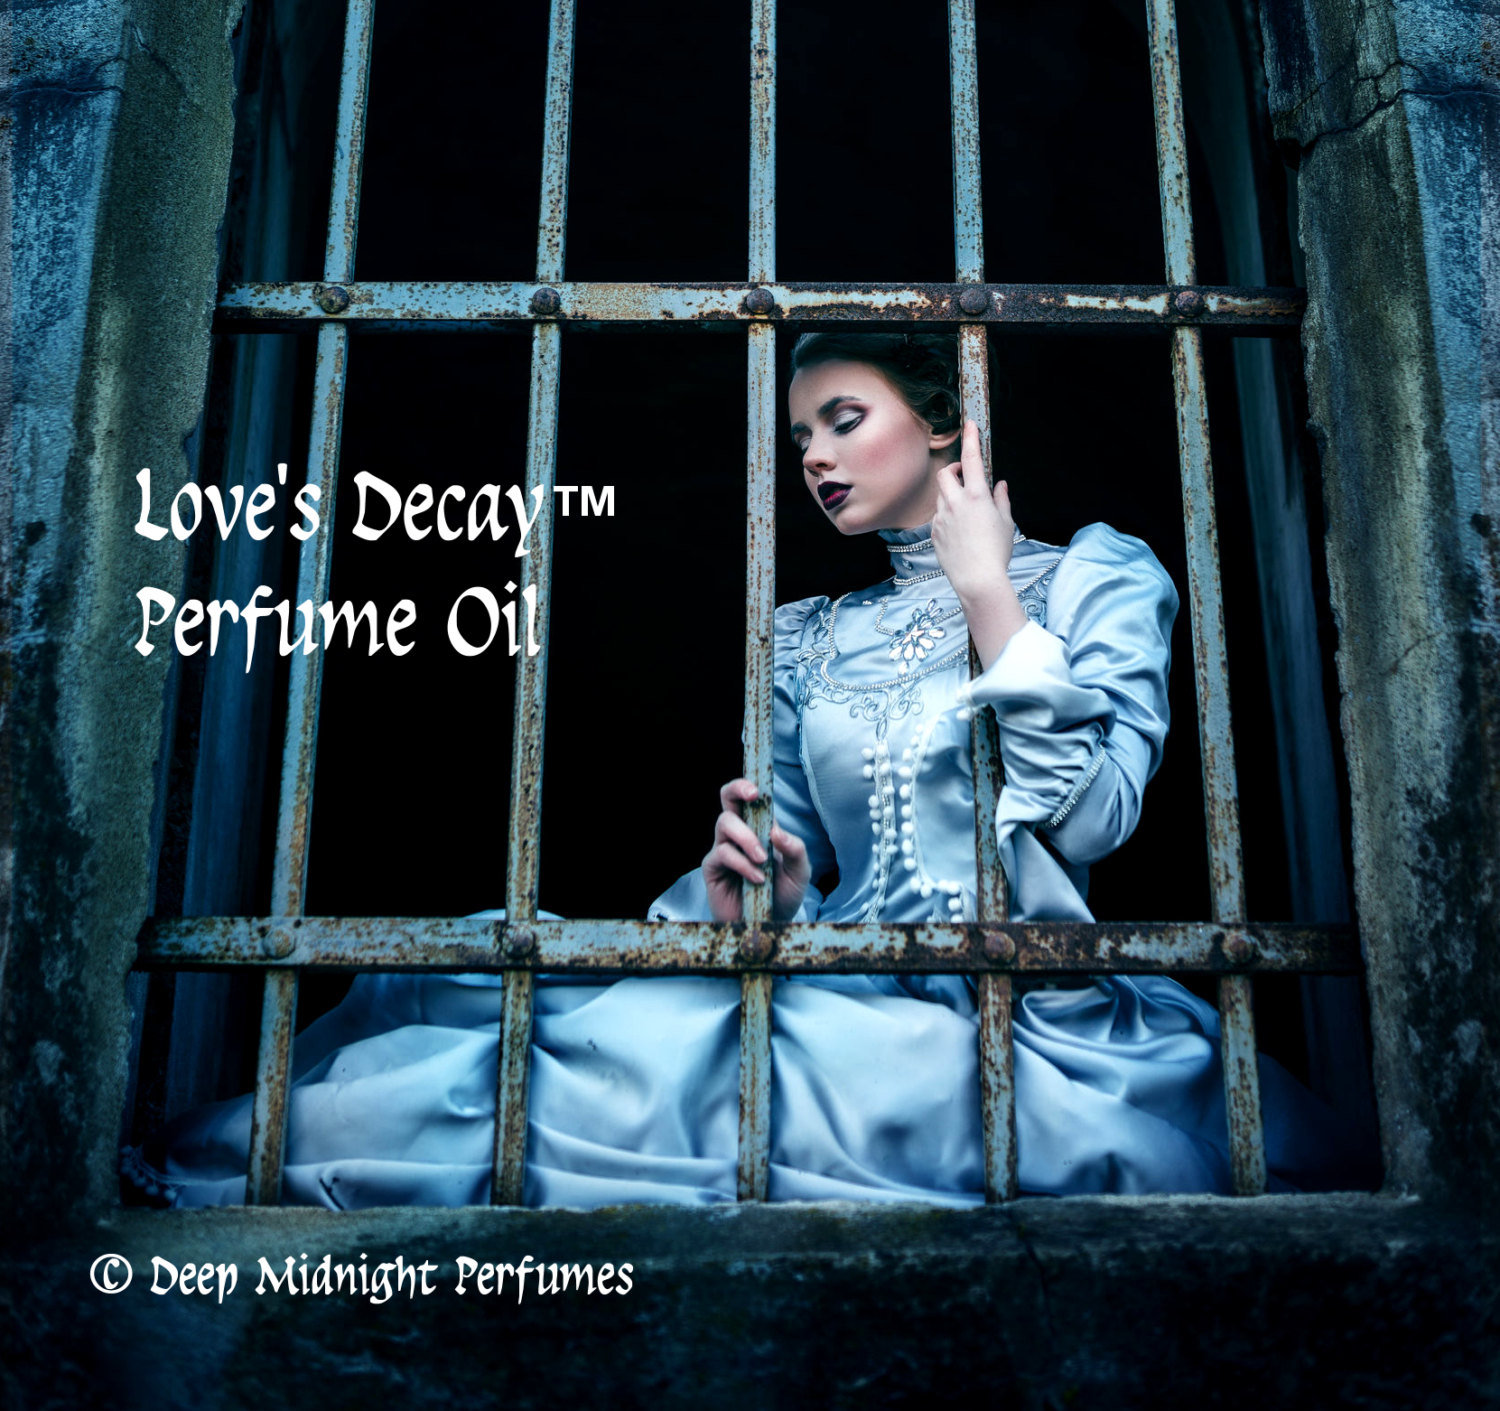 LOVE'S DECAY™ Perfume Oil - Stargazer Lilies, Forget Me Nots, Bourbon, Saffron, light Amber, Tobacco Leaf - GOTHIC Valentine's Perfume